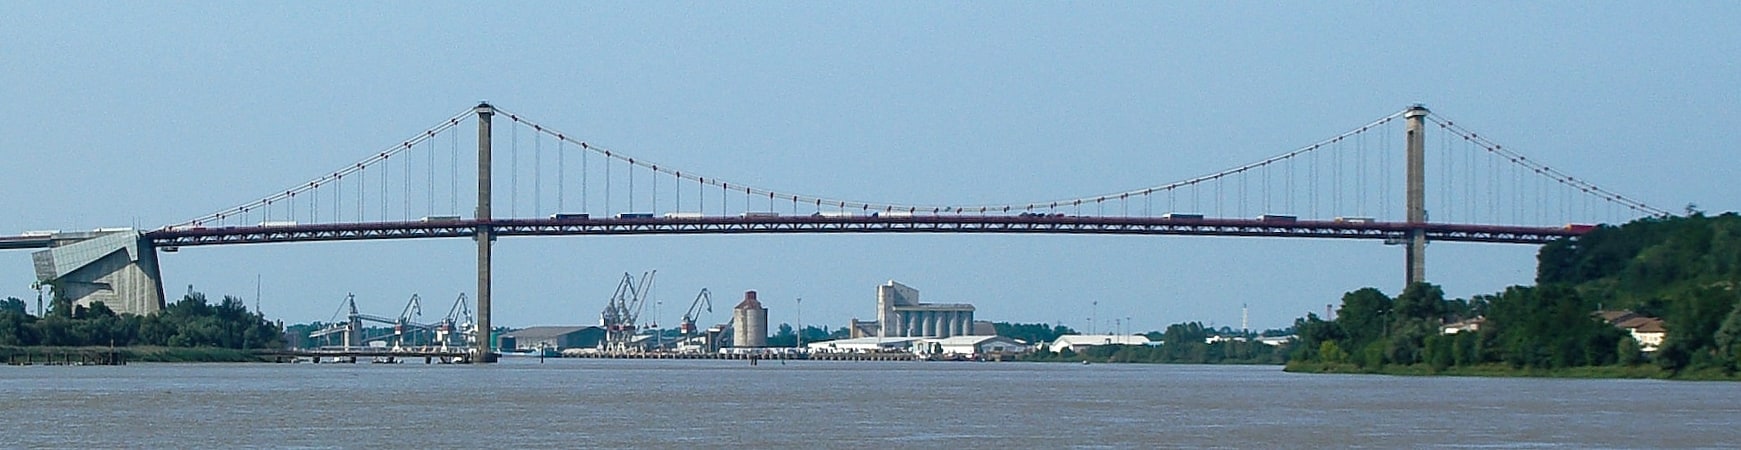 Hängebrücke in Bordeaux, Frankreich